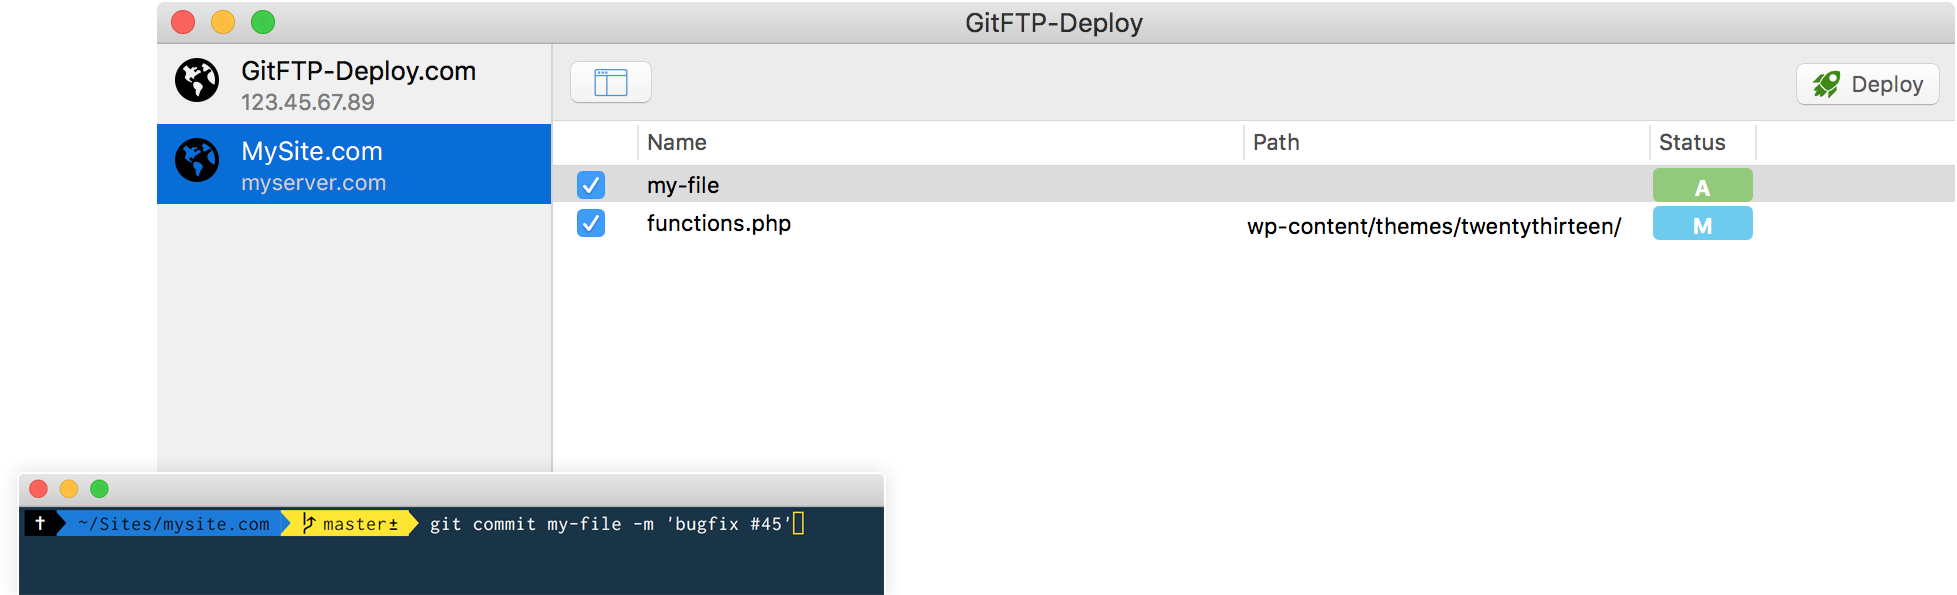 GitFTP-Deploy for Mac 2.5.2 注册版 - 优秀的FTP 上传部署工具